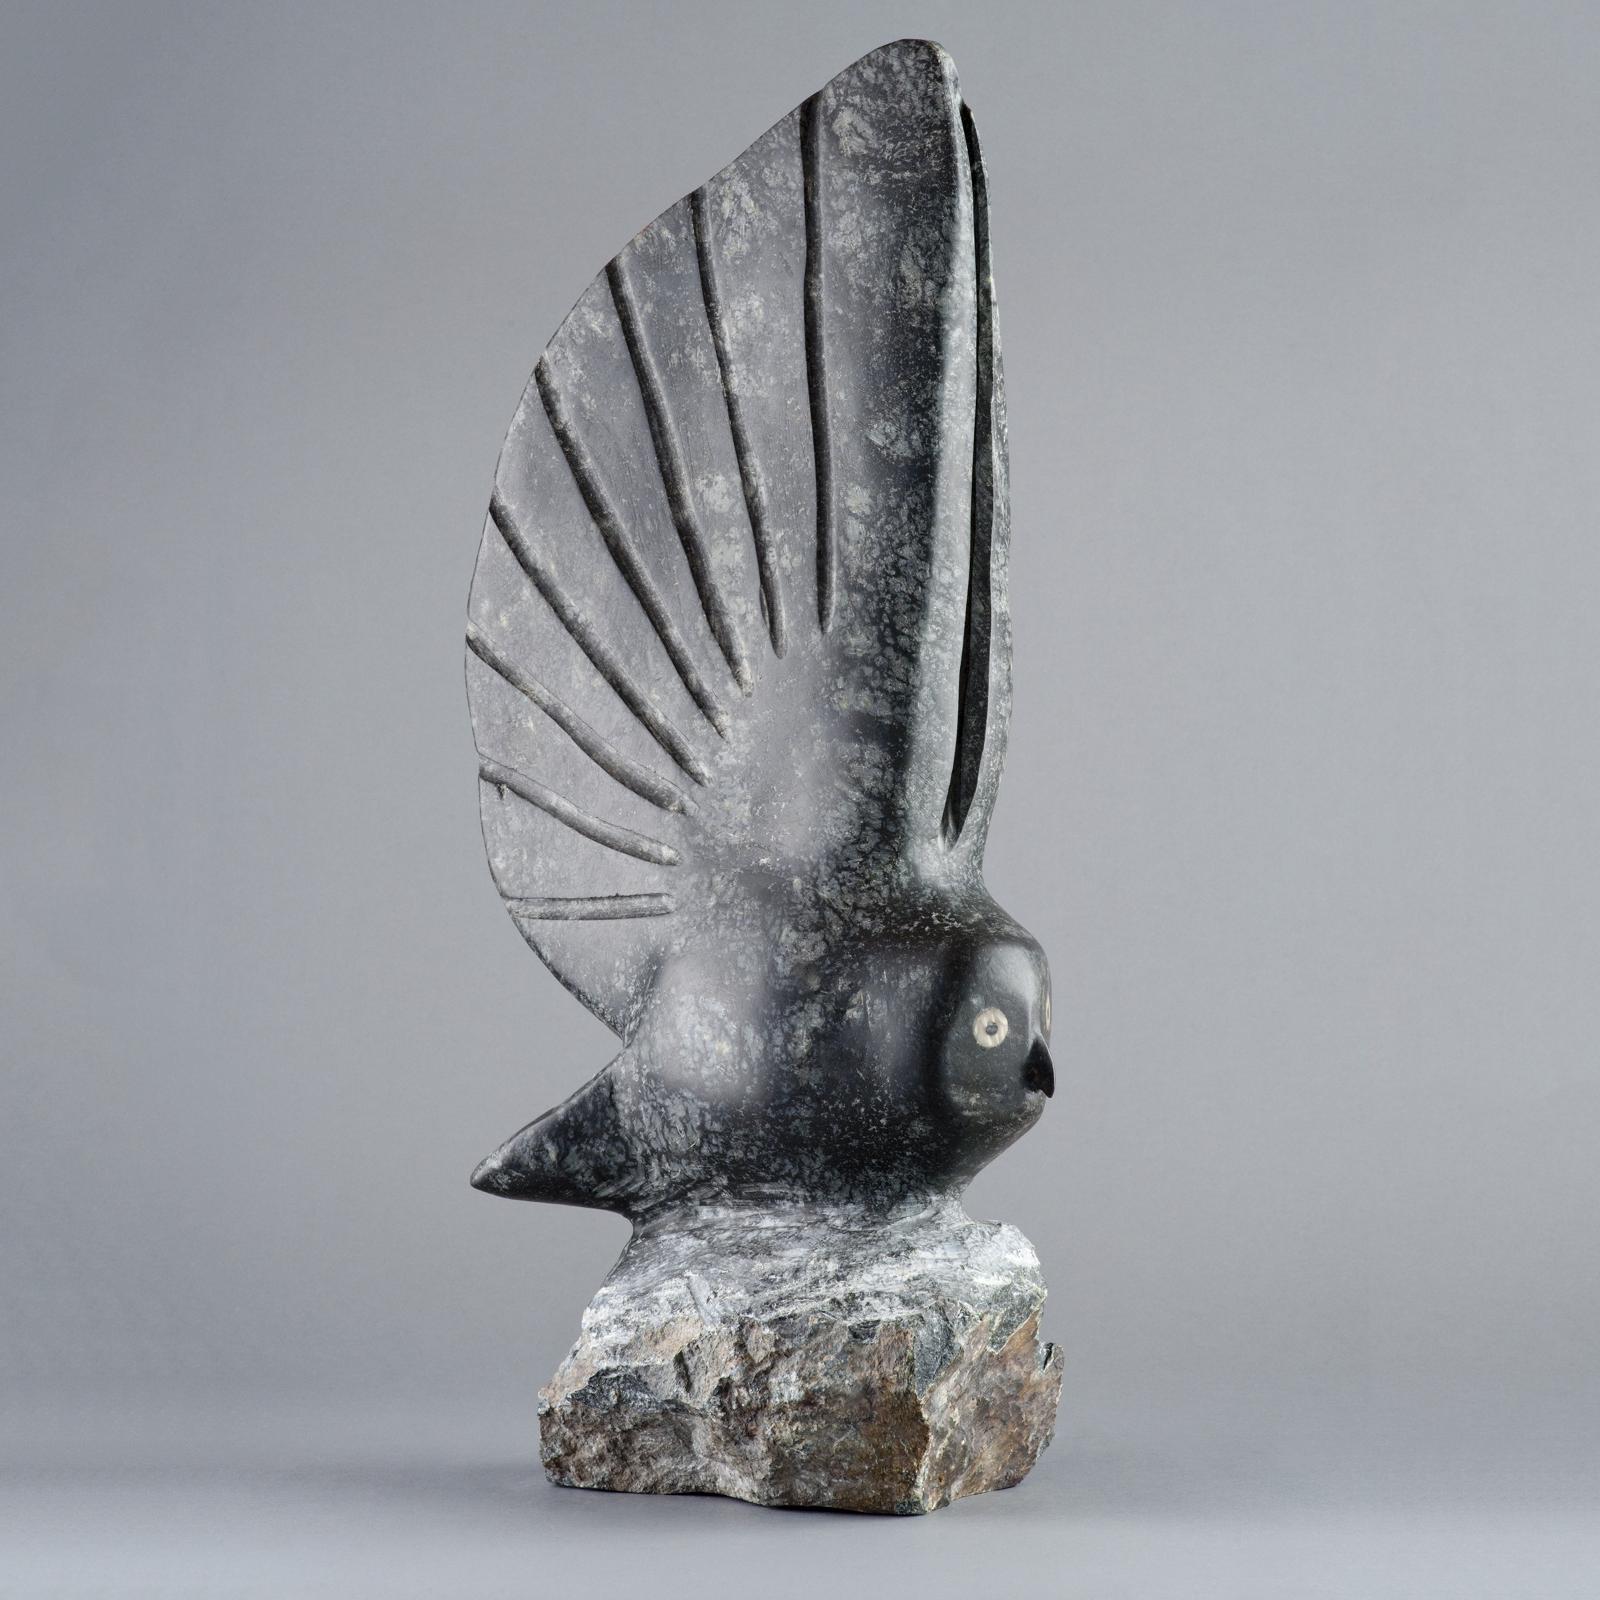 Padluq Qiatsuk (1935) - Owl With Raised Wings